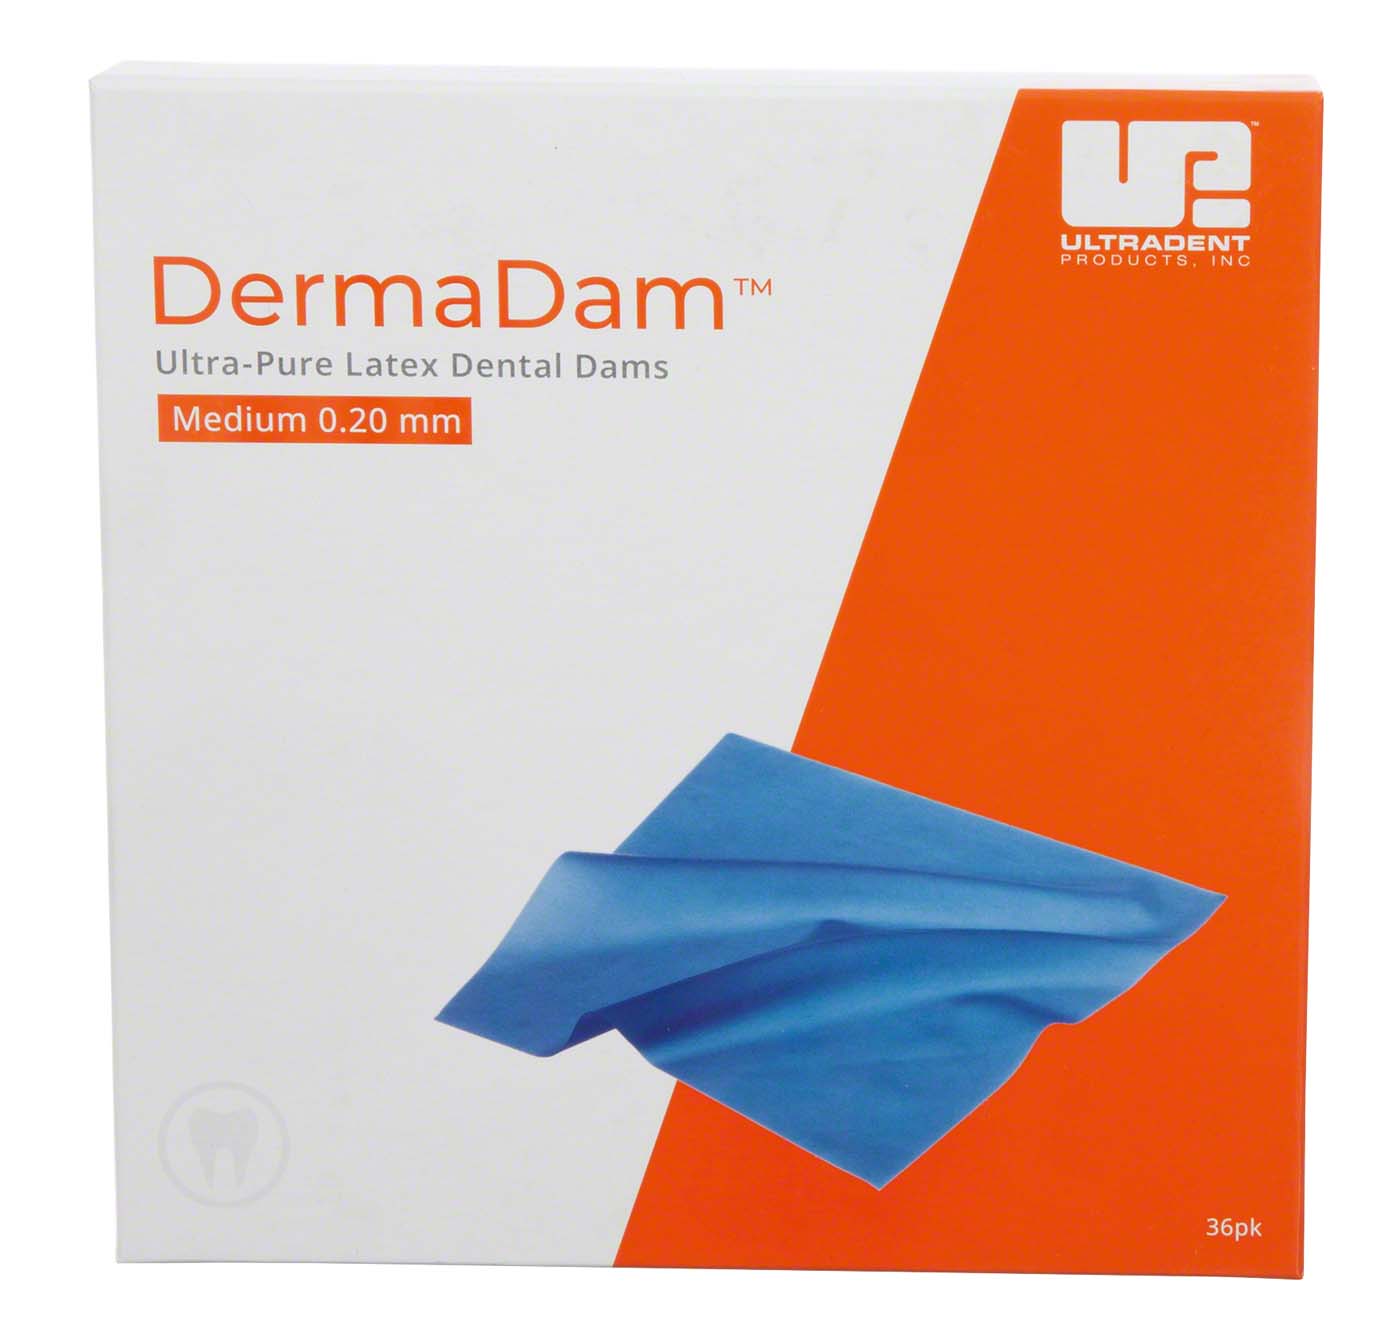 DermaDam™ Ultradent Products